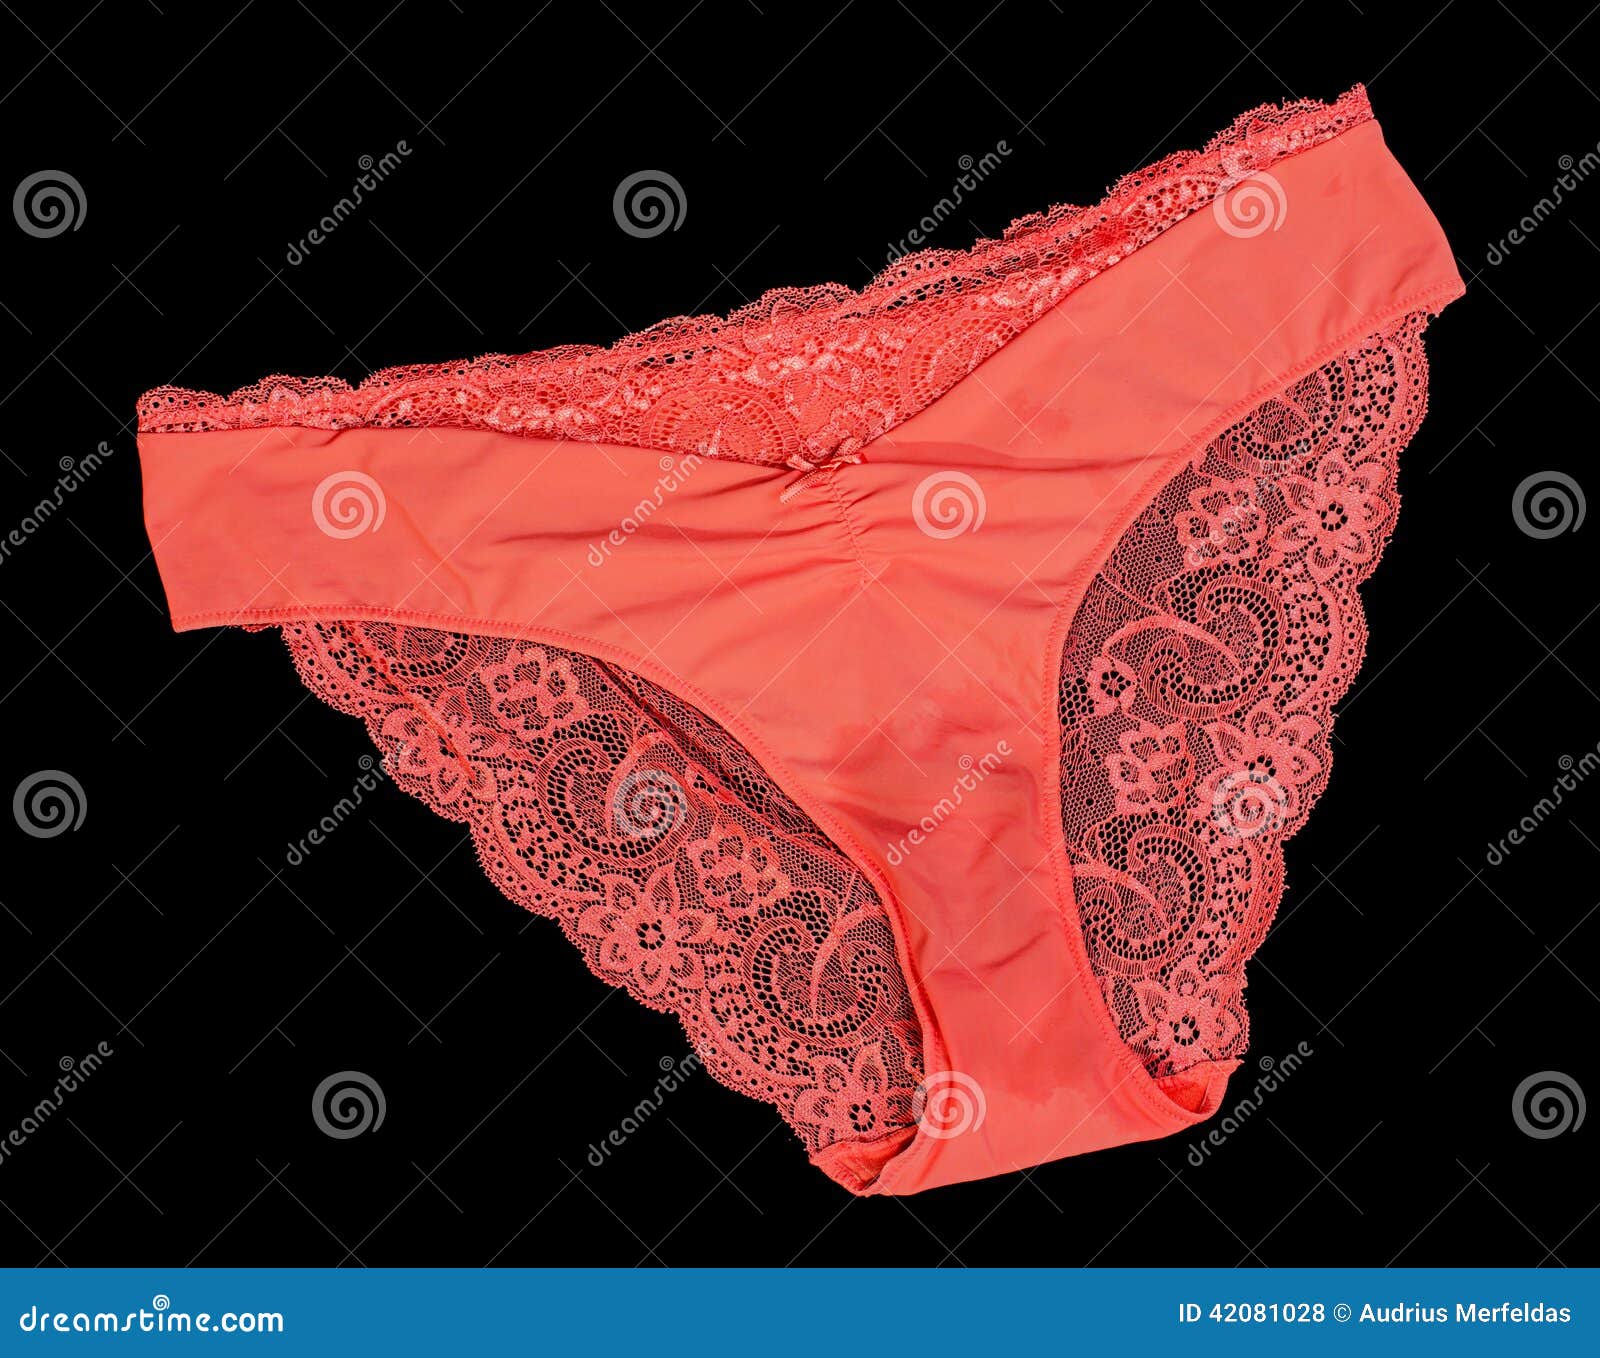 https://thumbs.dreamstime.com/z/sexual-arousal-concept-wet-female-lingerie-sexy-woman-underwear-dark-background-42081028.jpg